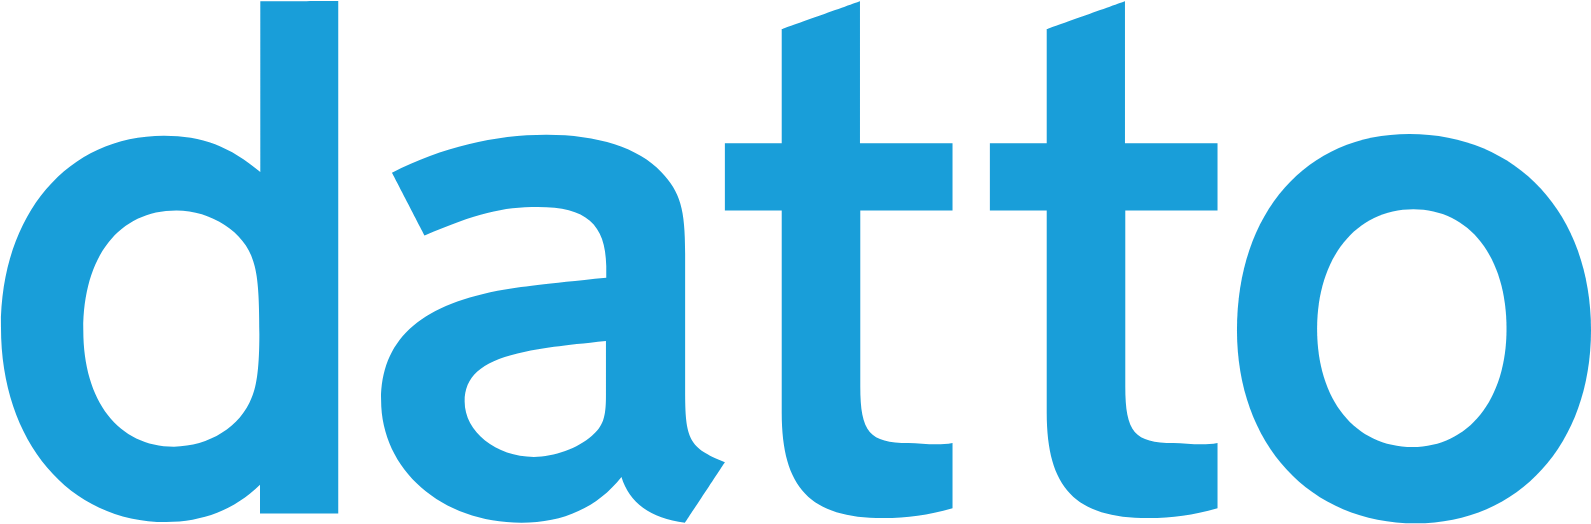 Datto logo large (transparent PNG)